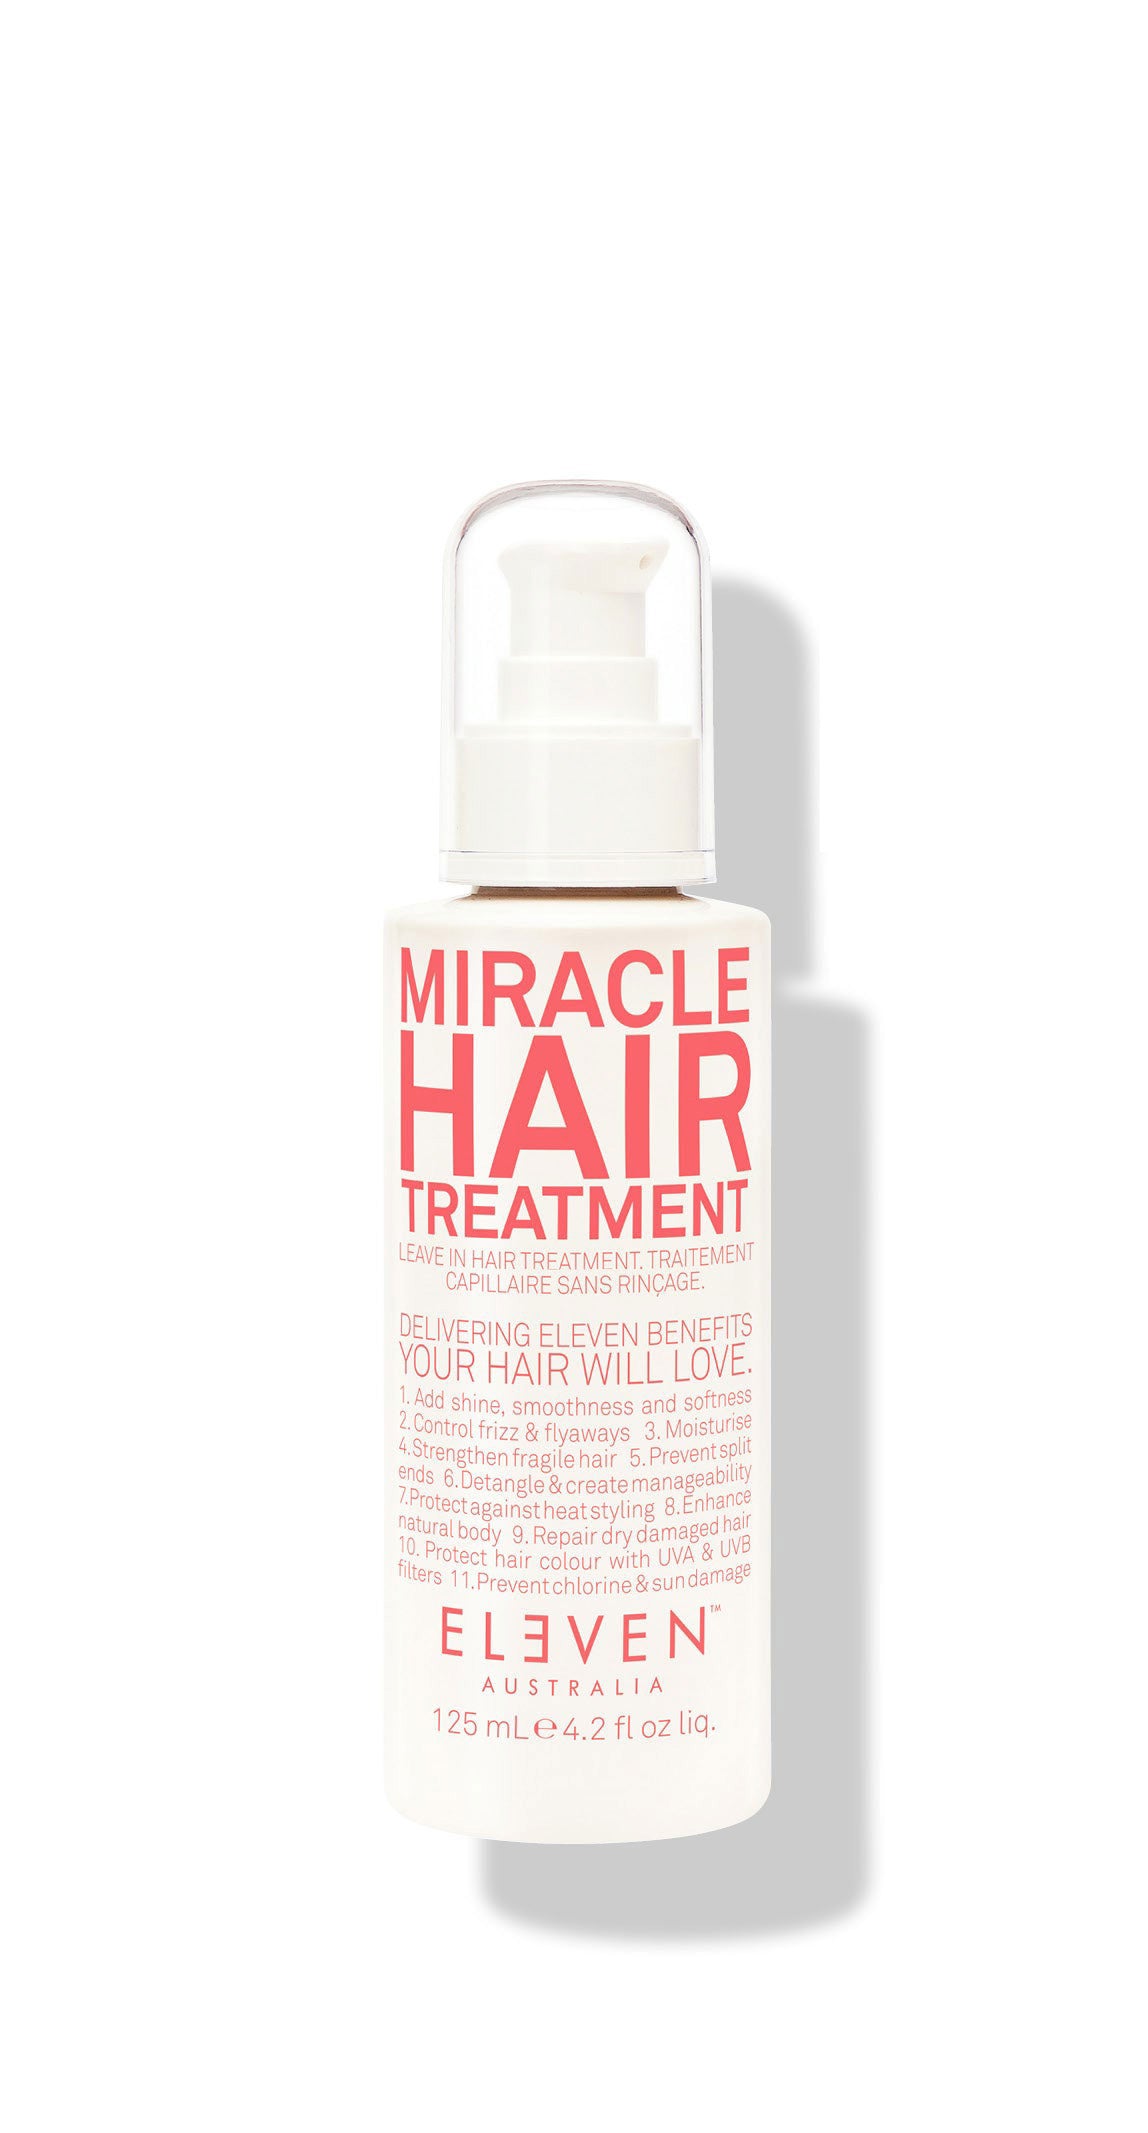 MIRACLE HAIR TREATMENT 4.2 FL OZ